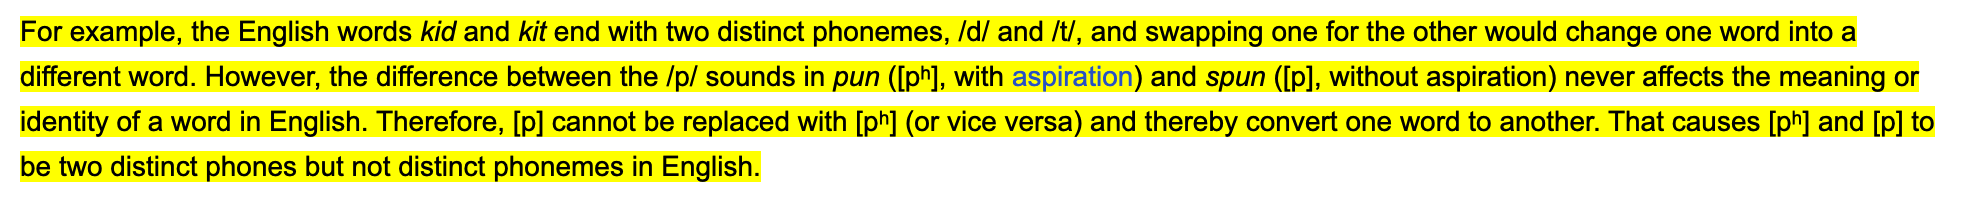 https://en.wikipedia.org/wiki/Phone_(phonetics)